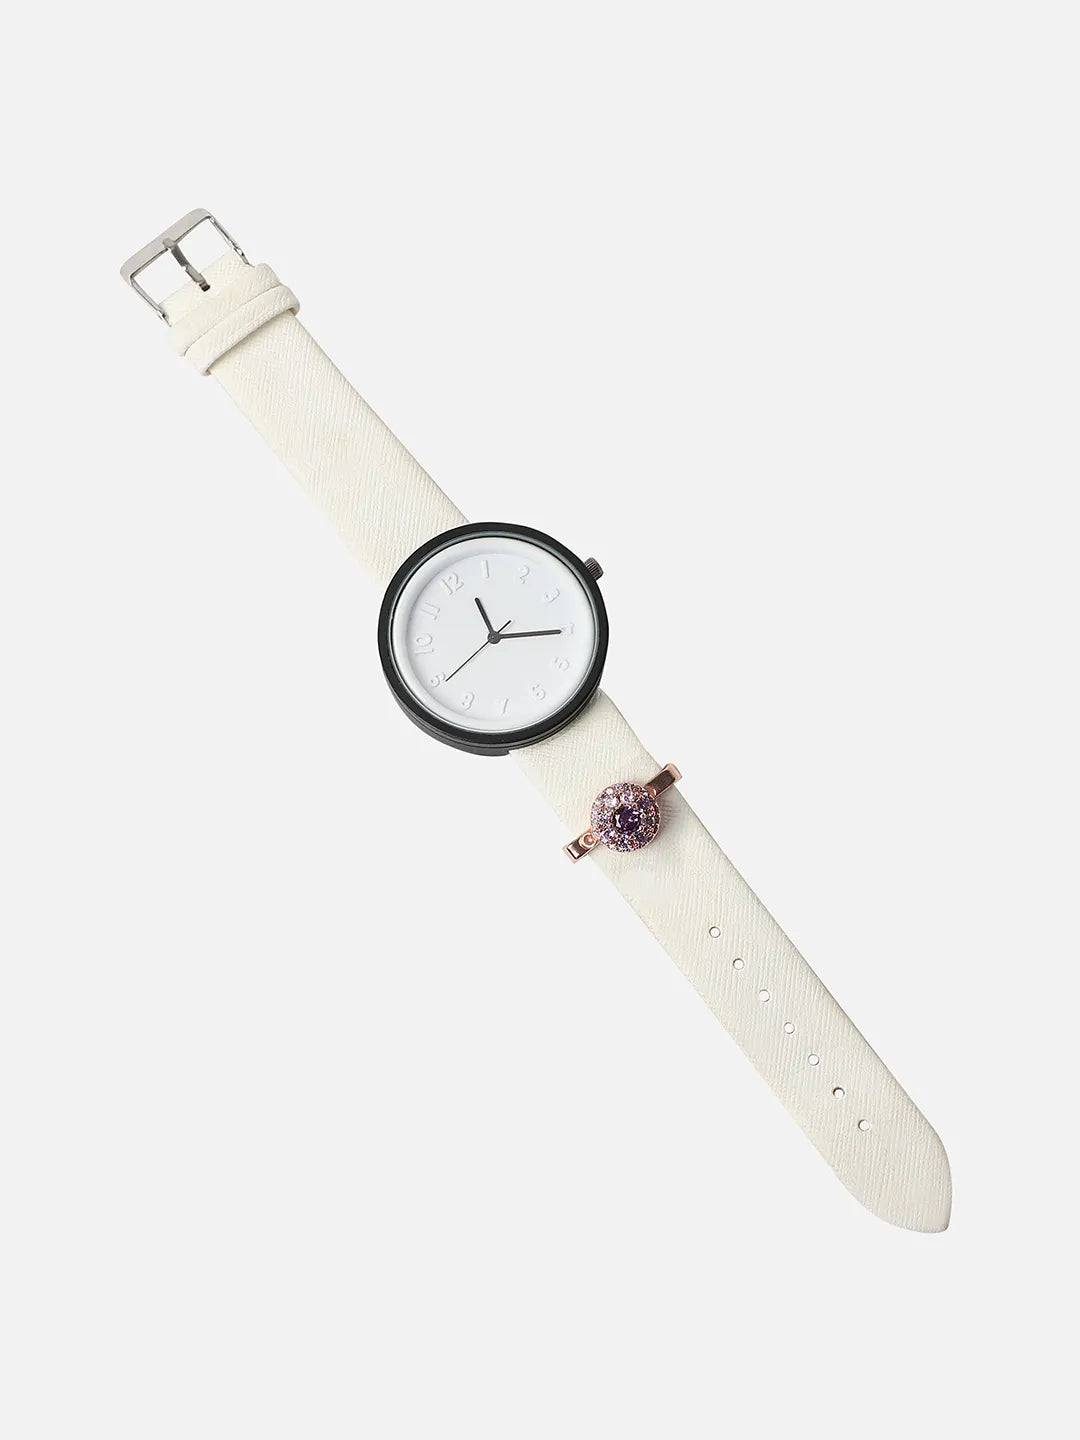 Round Analog Watch With Amethyst Watch Charm - White